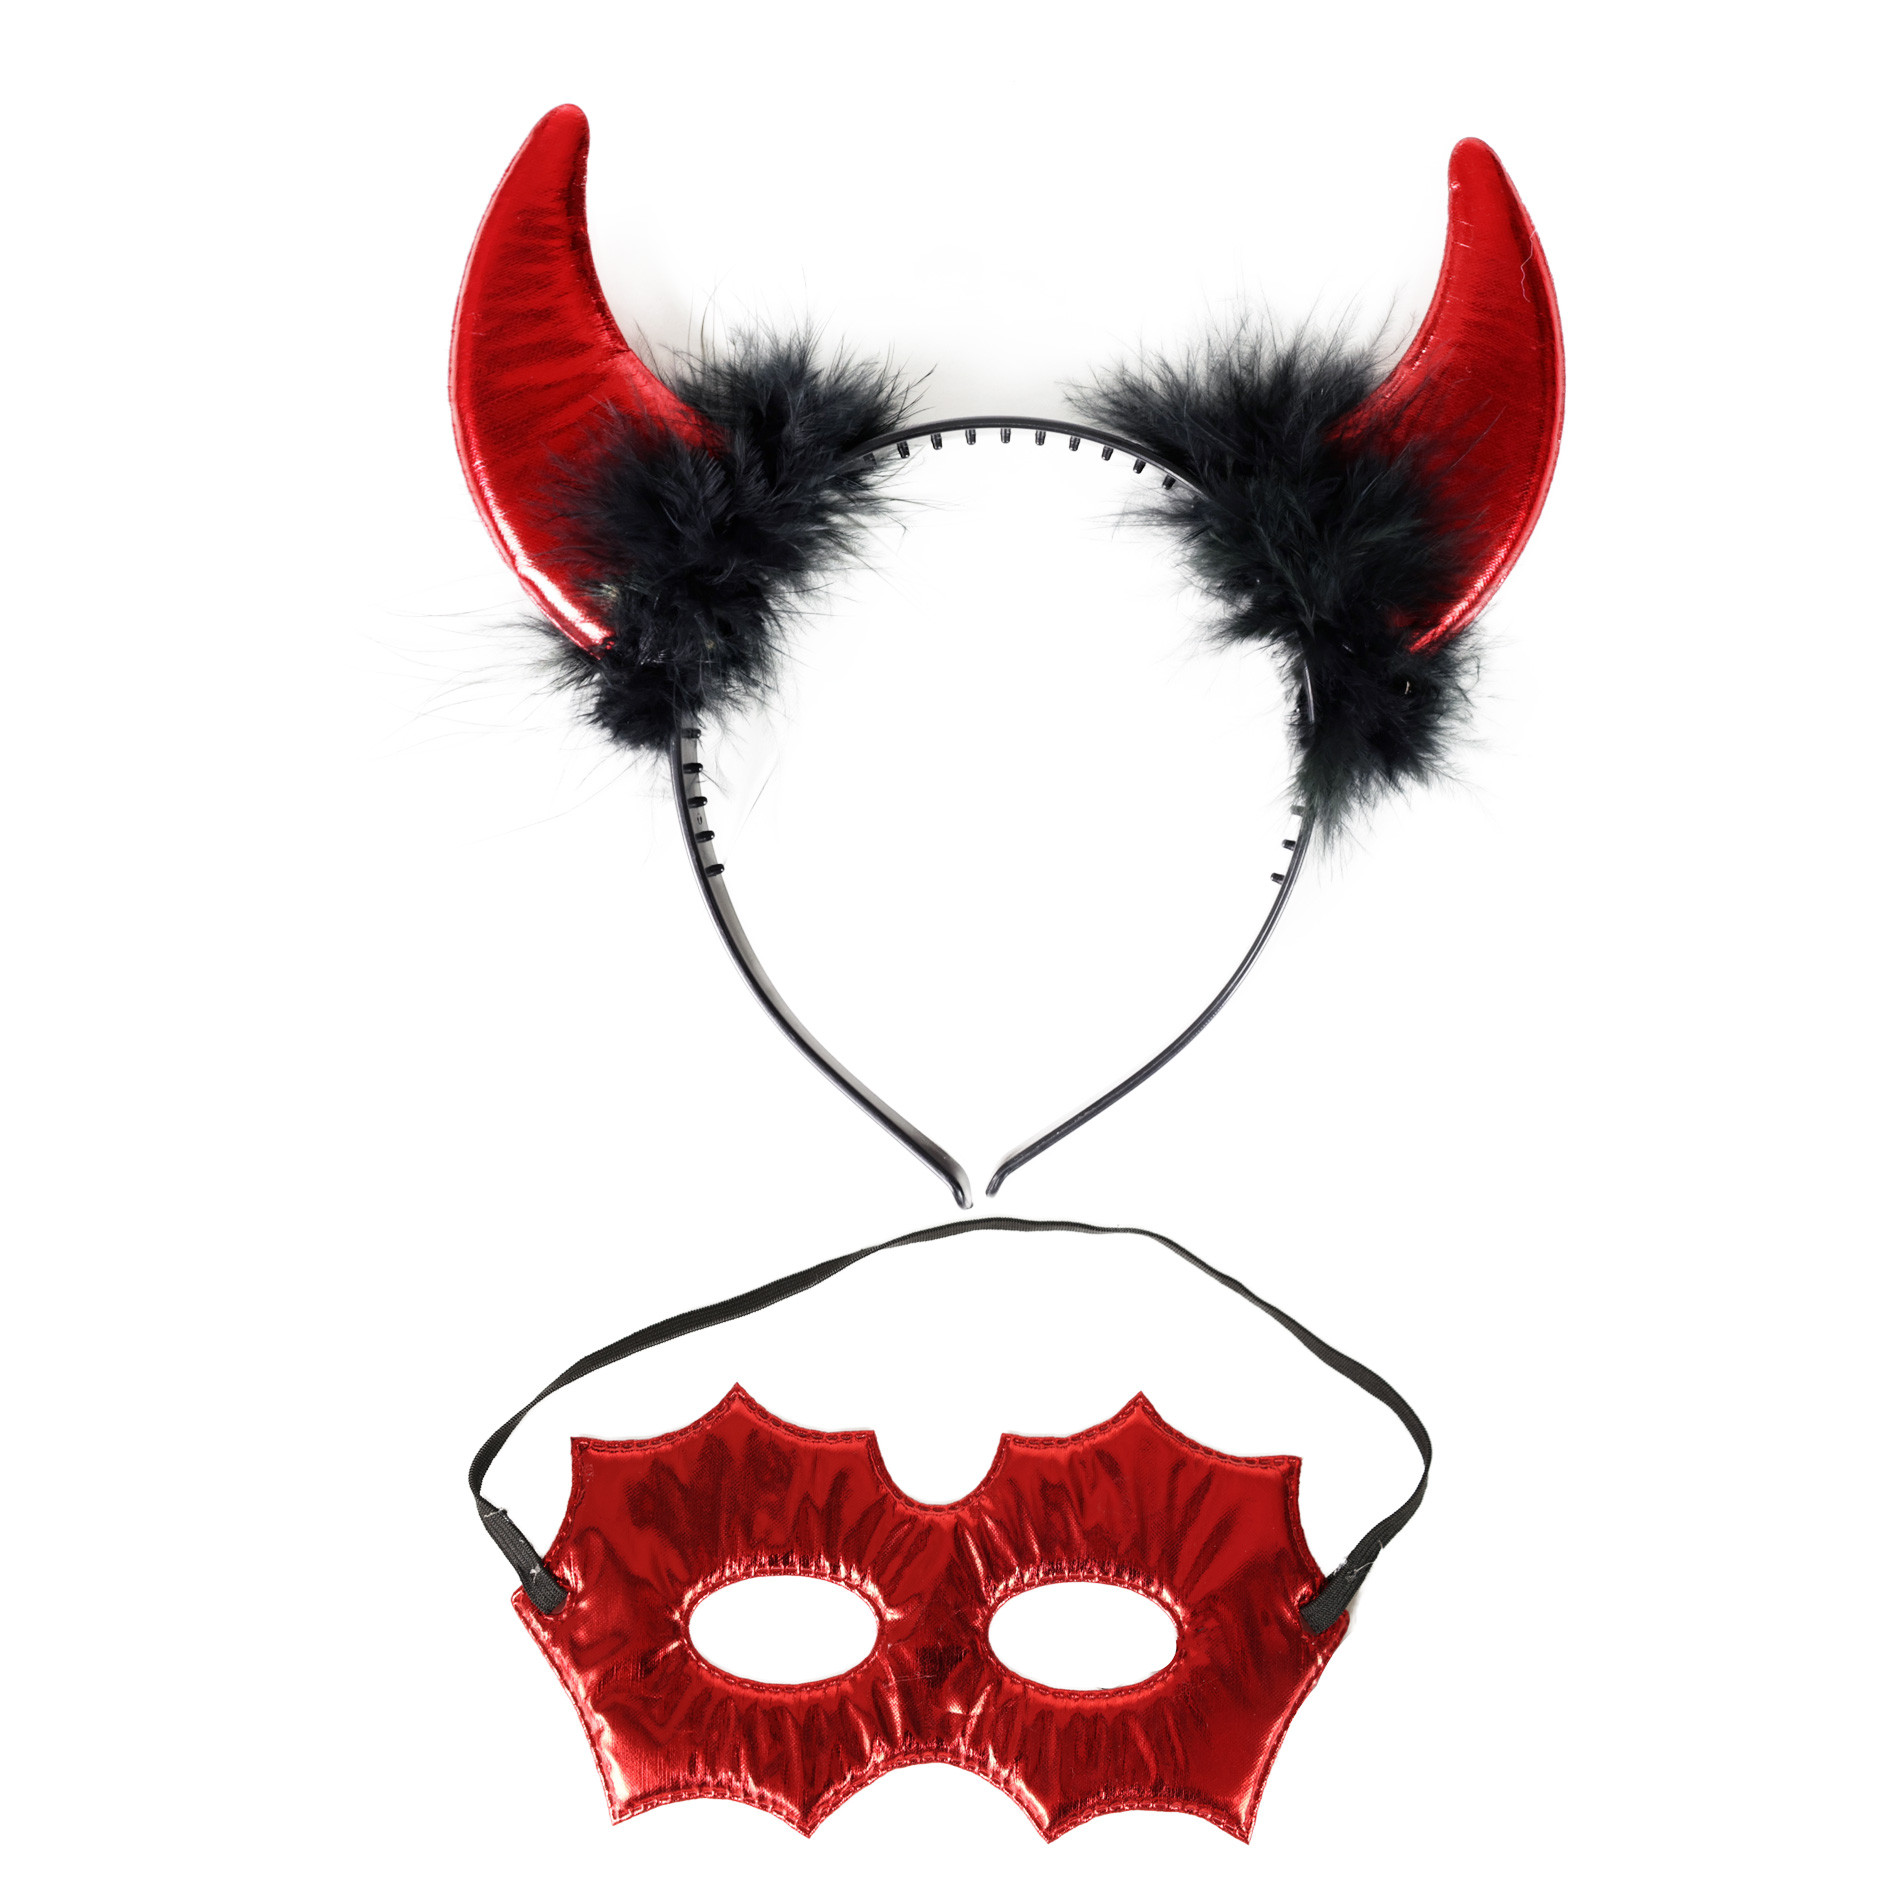 Devil headband and eye mask